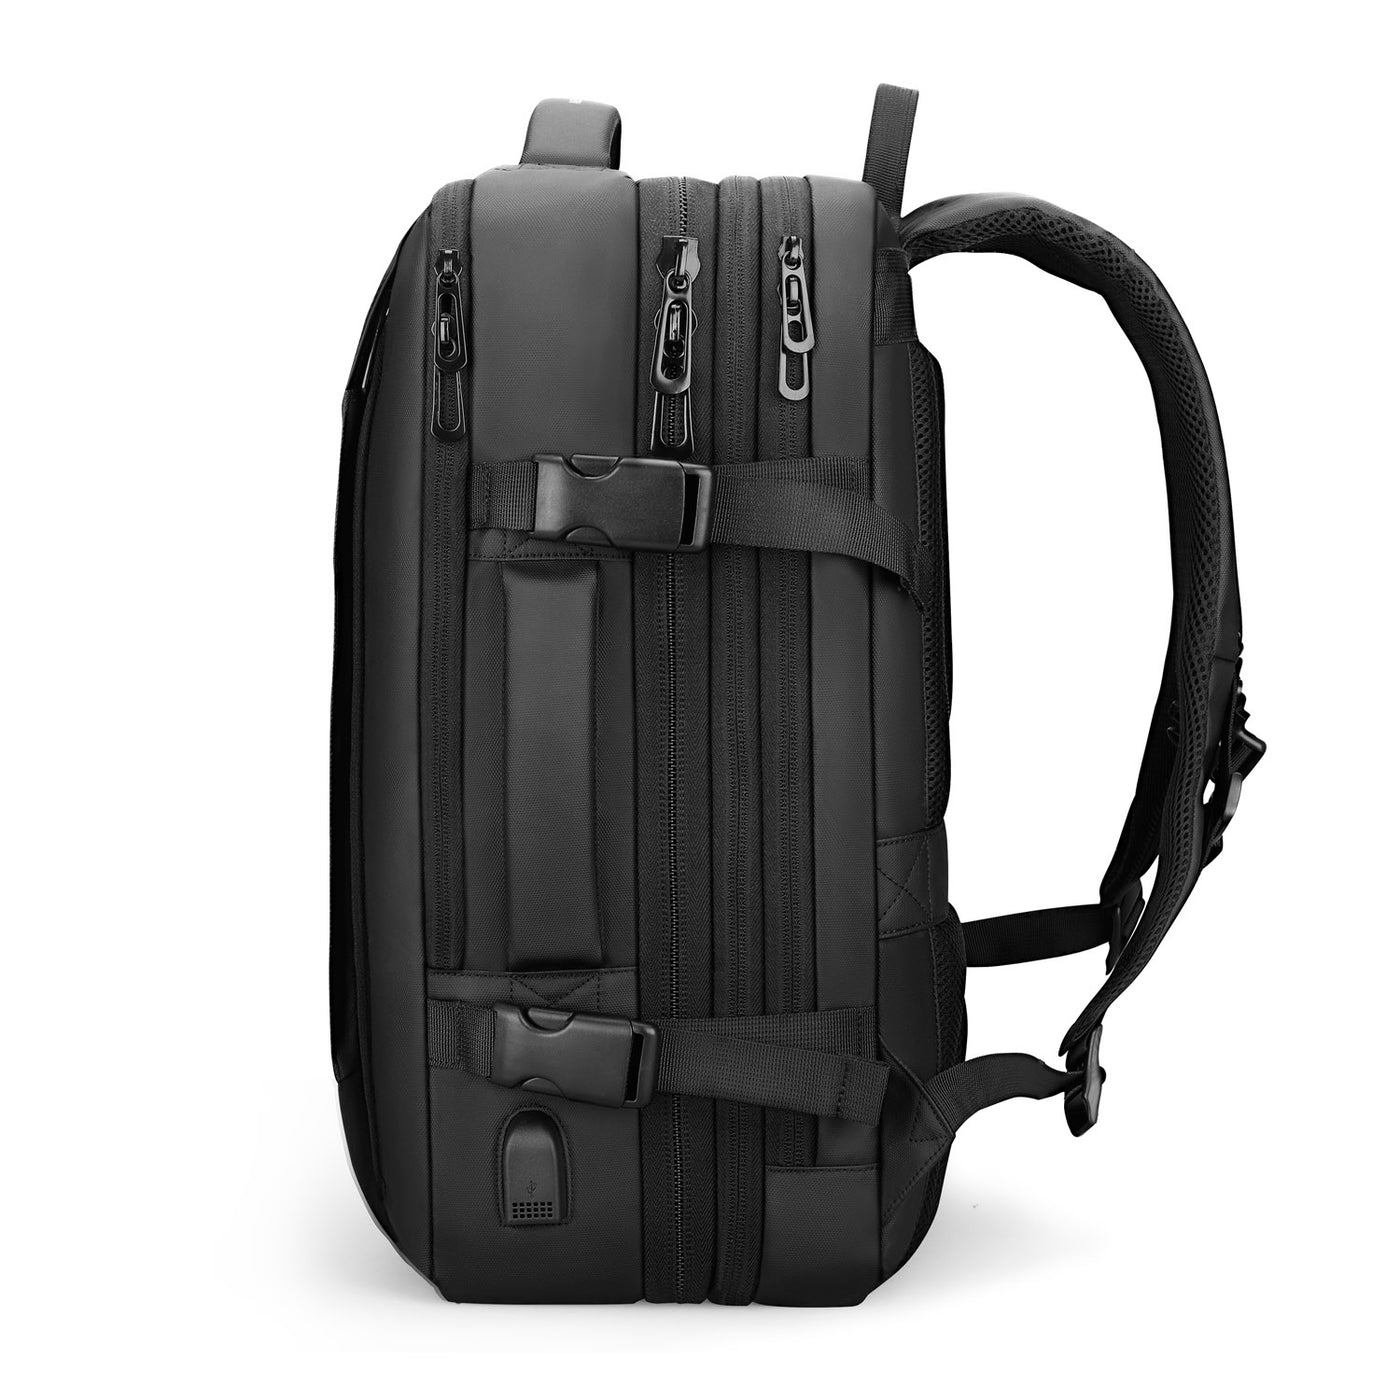 Mark Ryden Infinity XL Rain usb charging business / travel backpack.